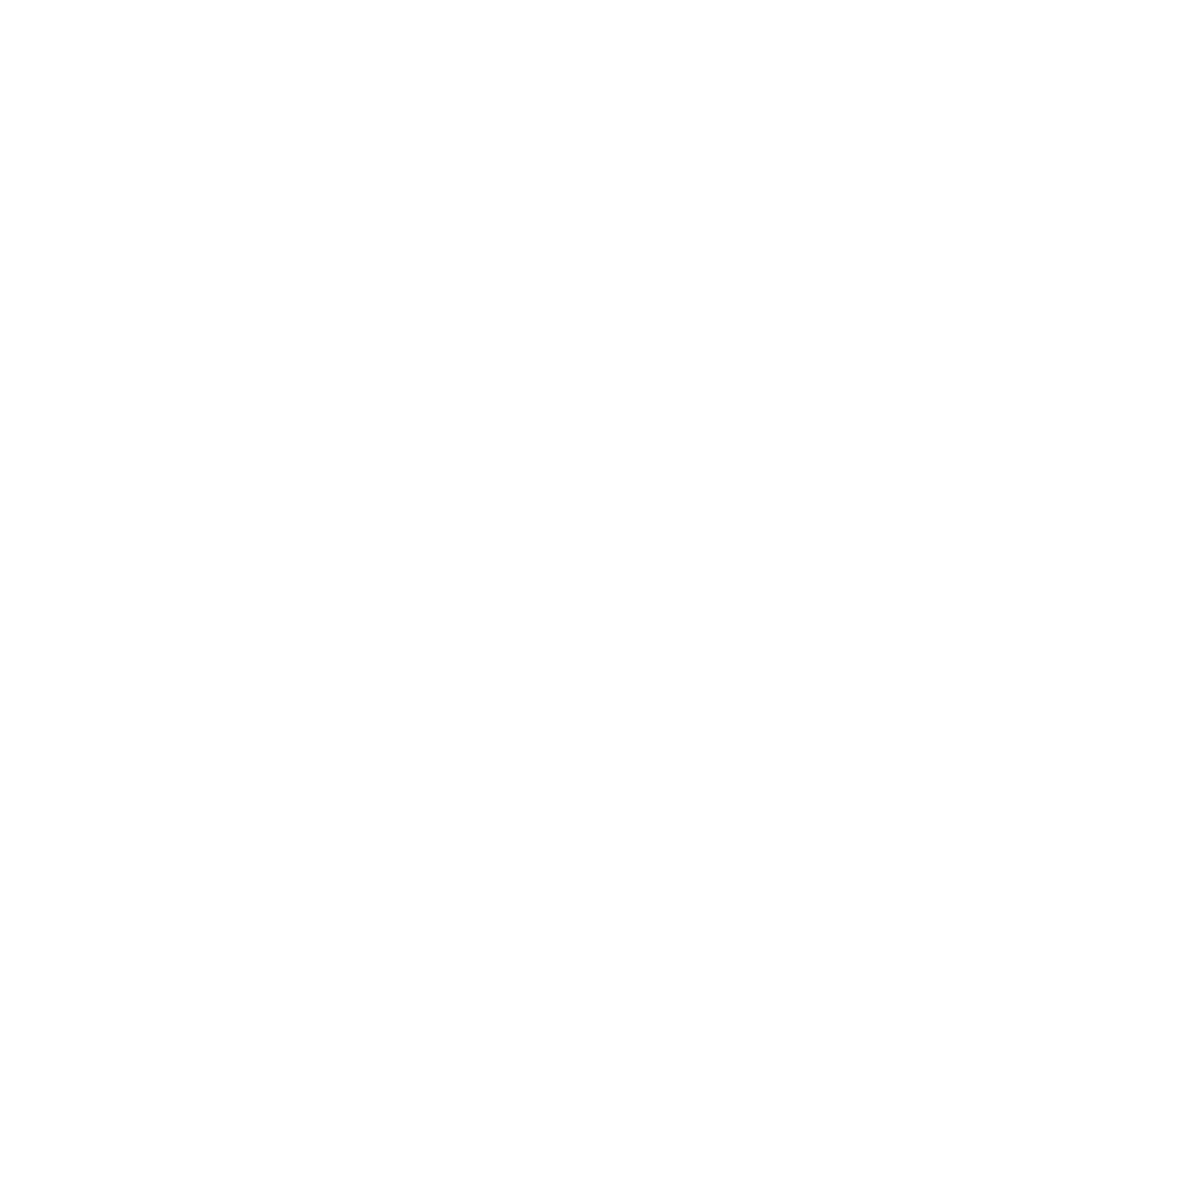 CyberKnights Robotics Inc.